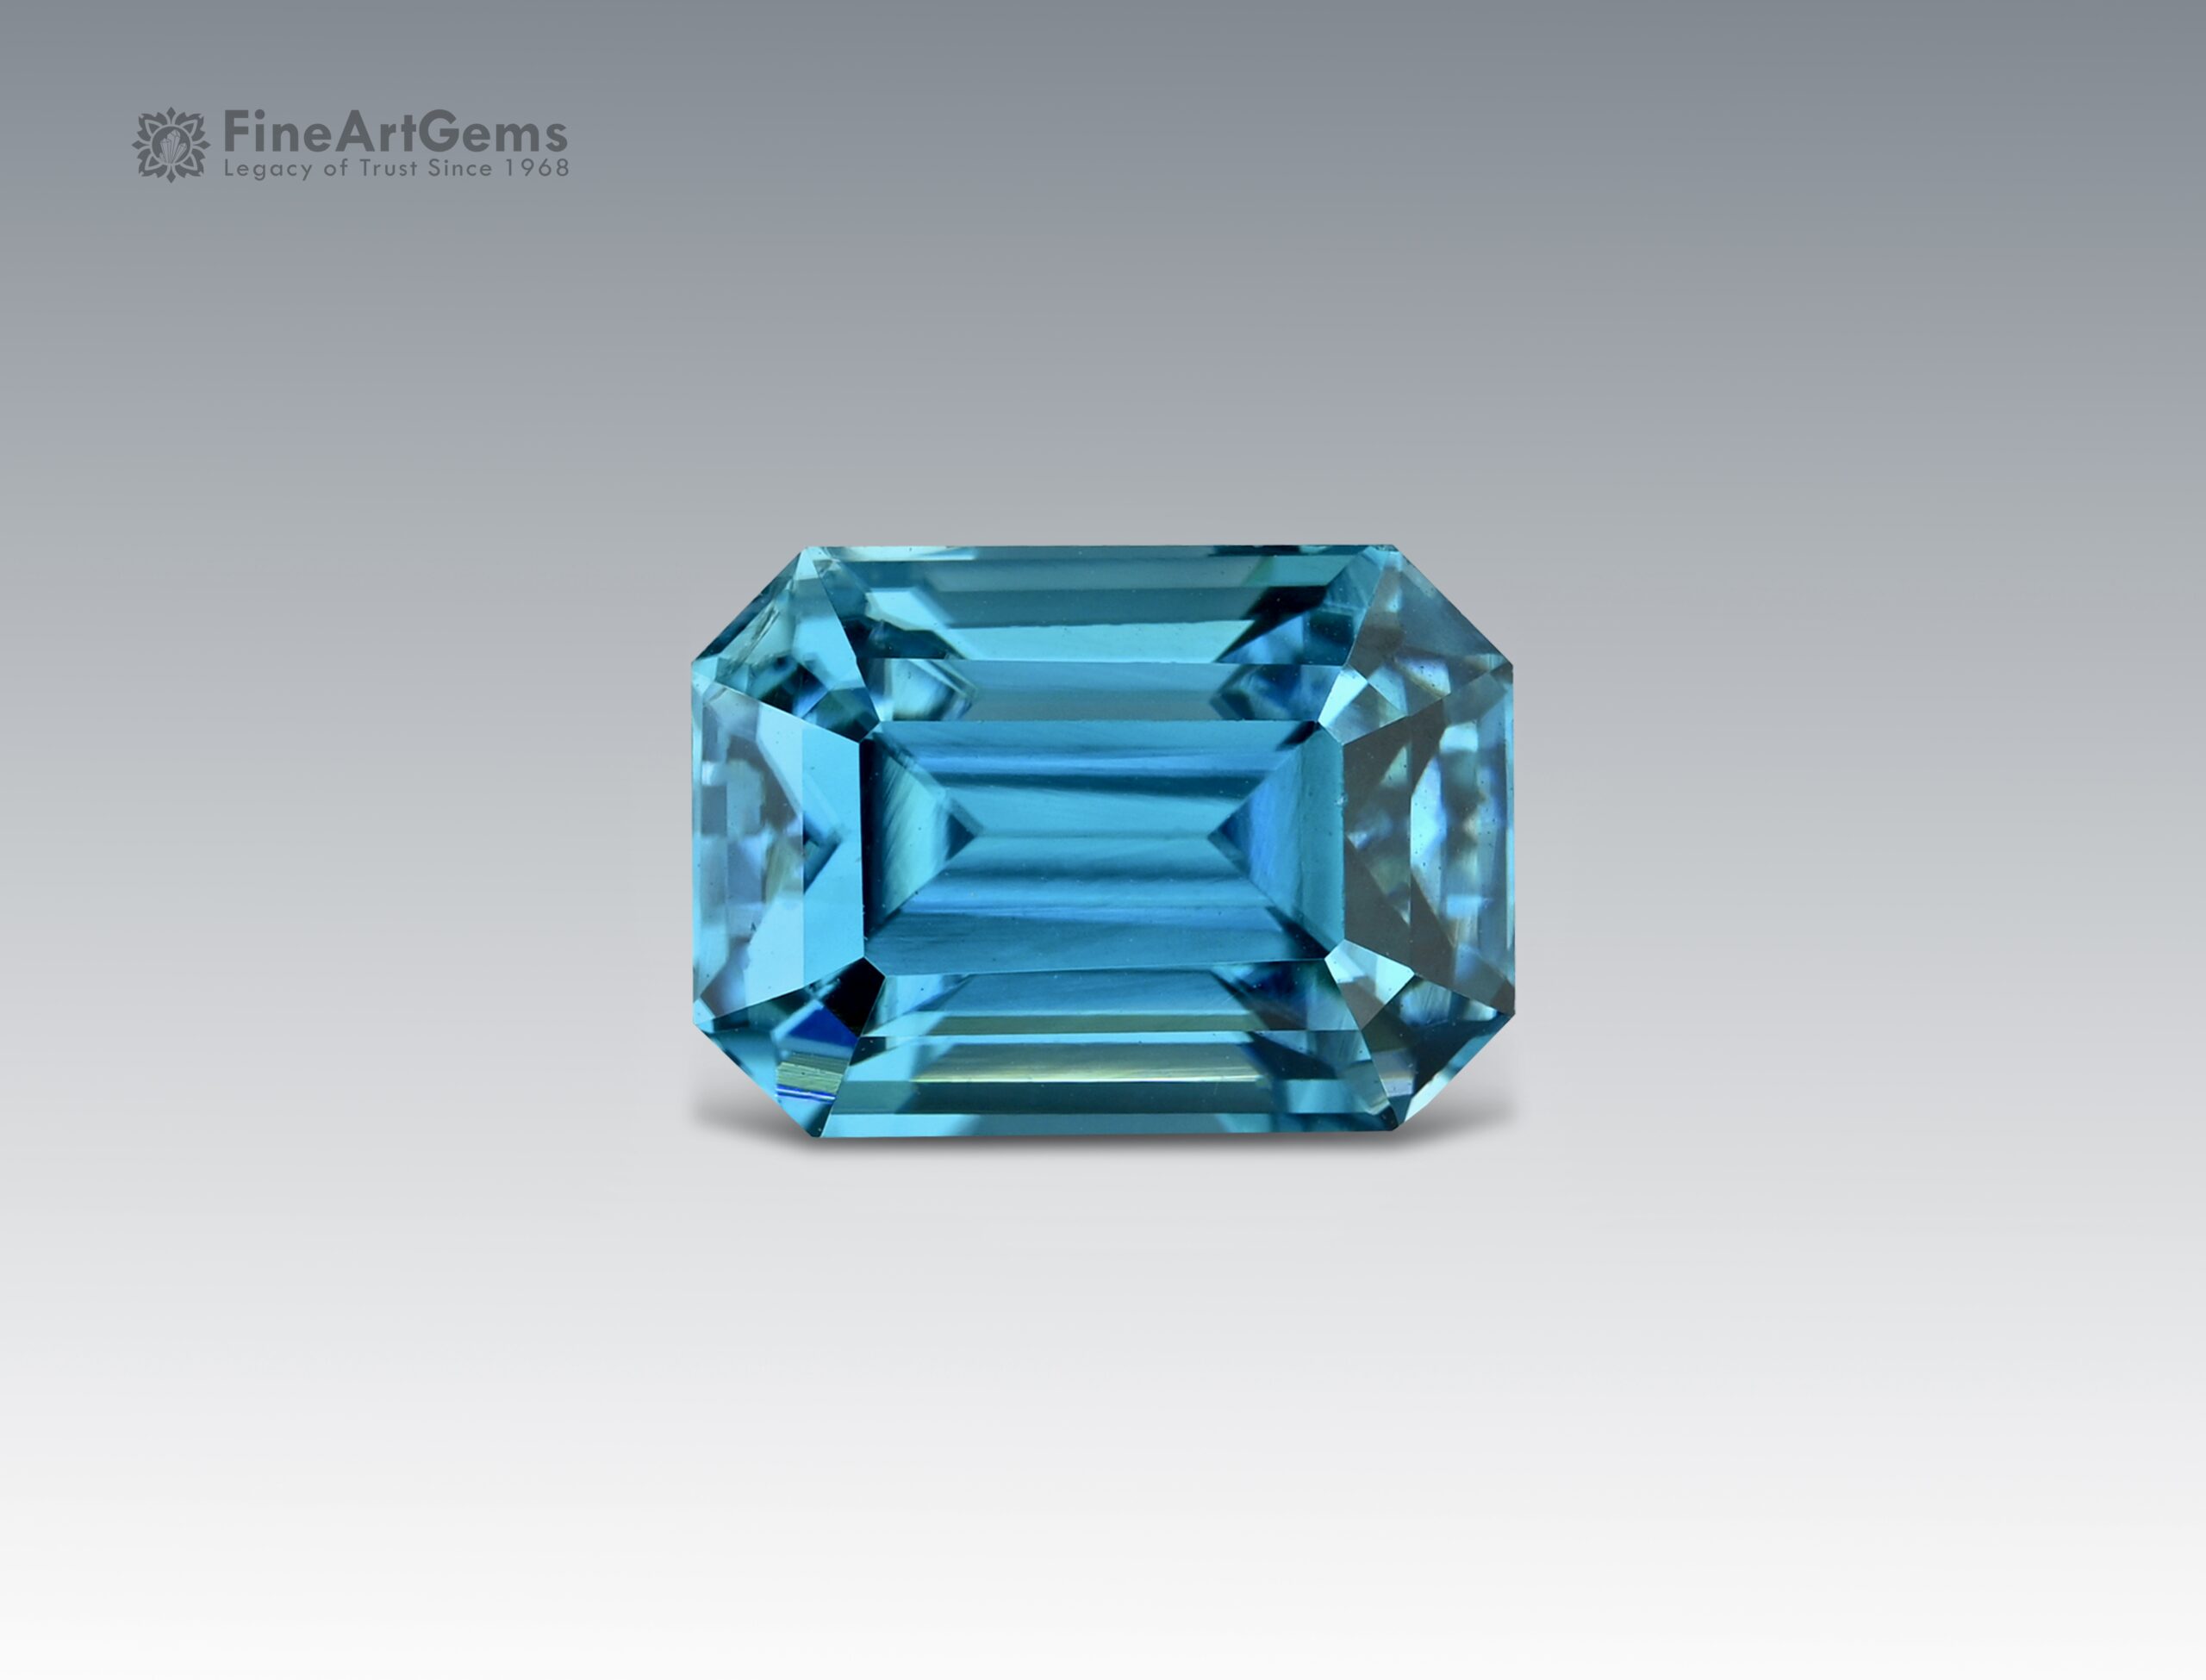 4.65 Carats Beautiful Blue Zircon Gemstone from Cambodia